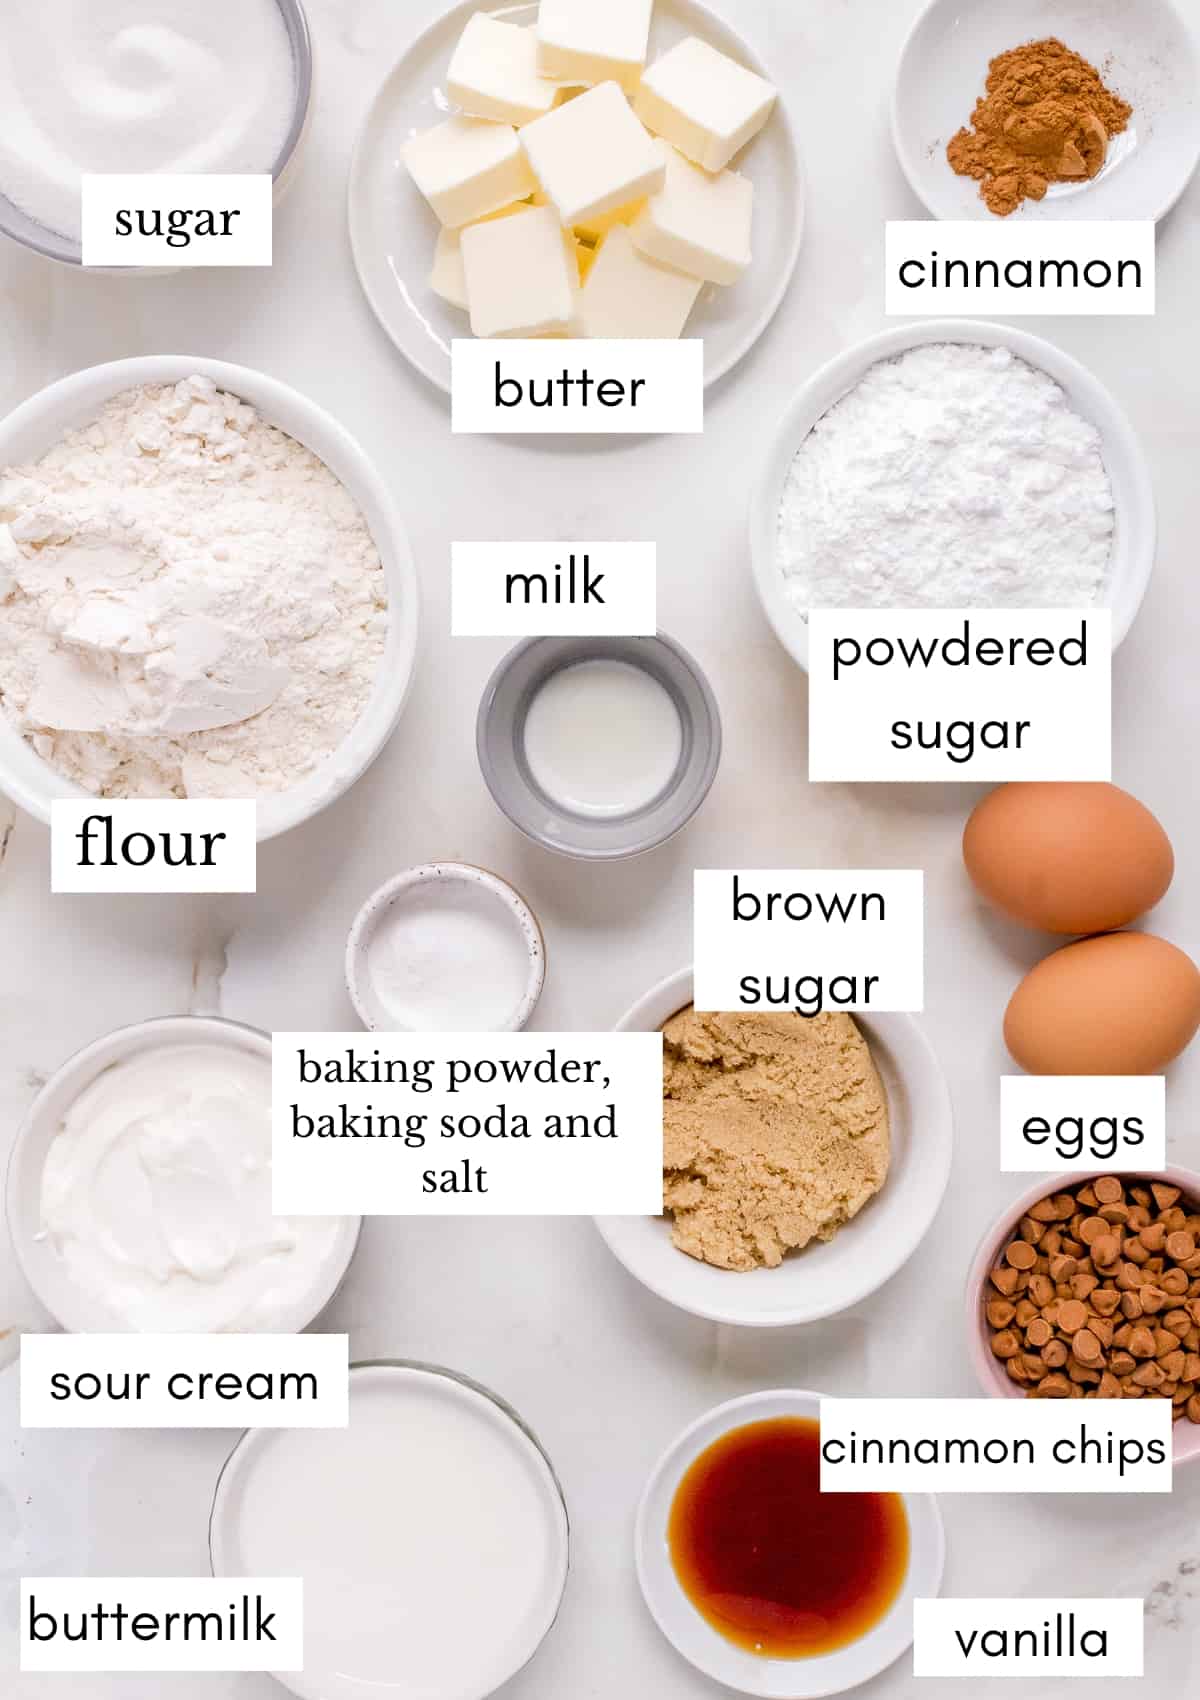 ingredients for cinnamon streusel muffins.